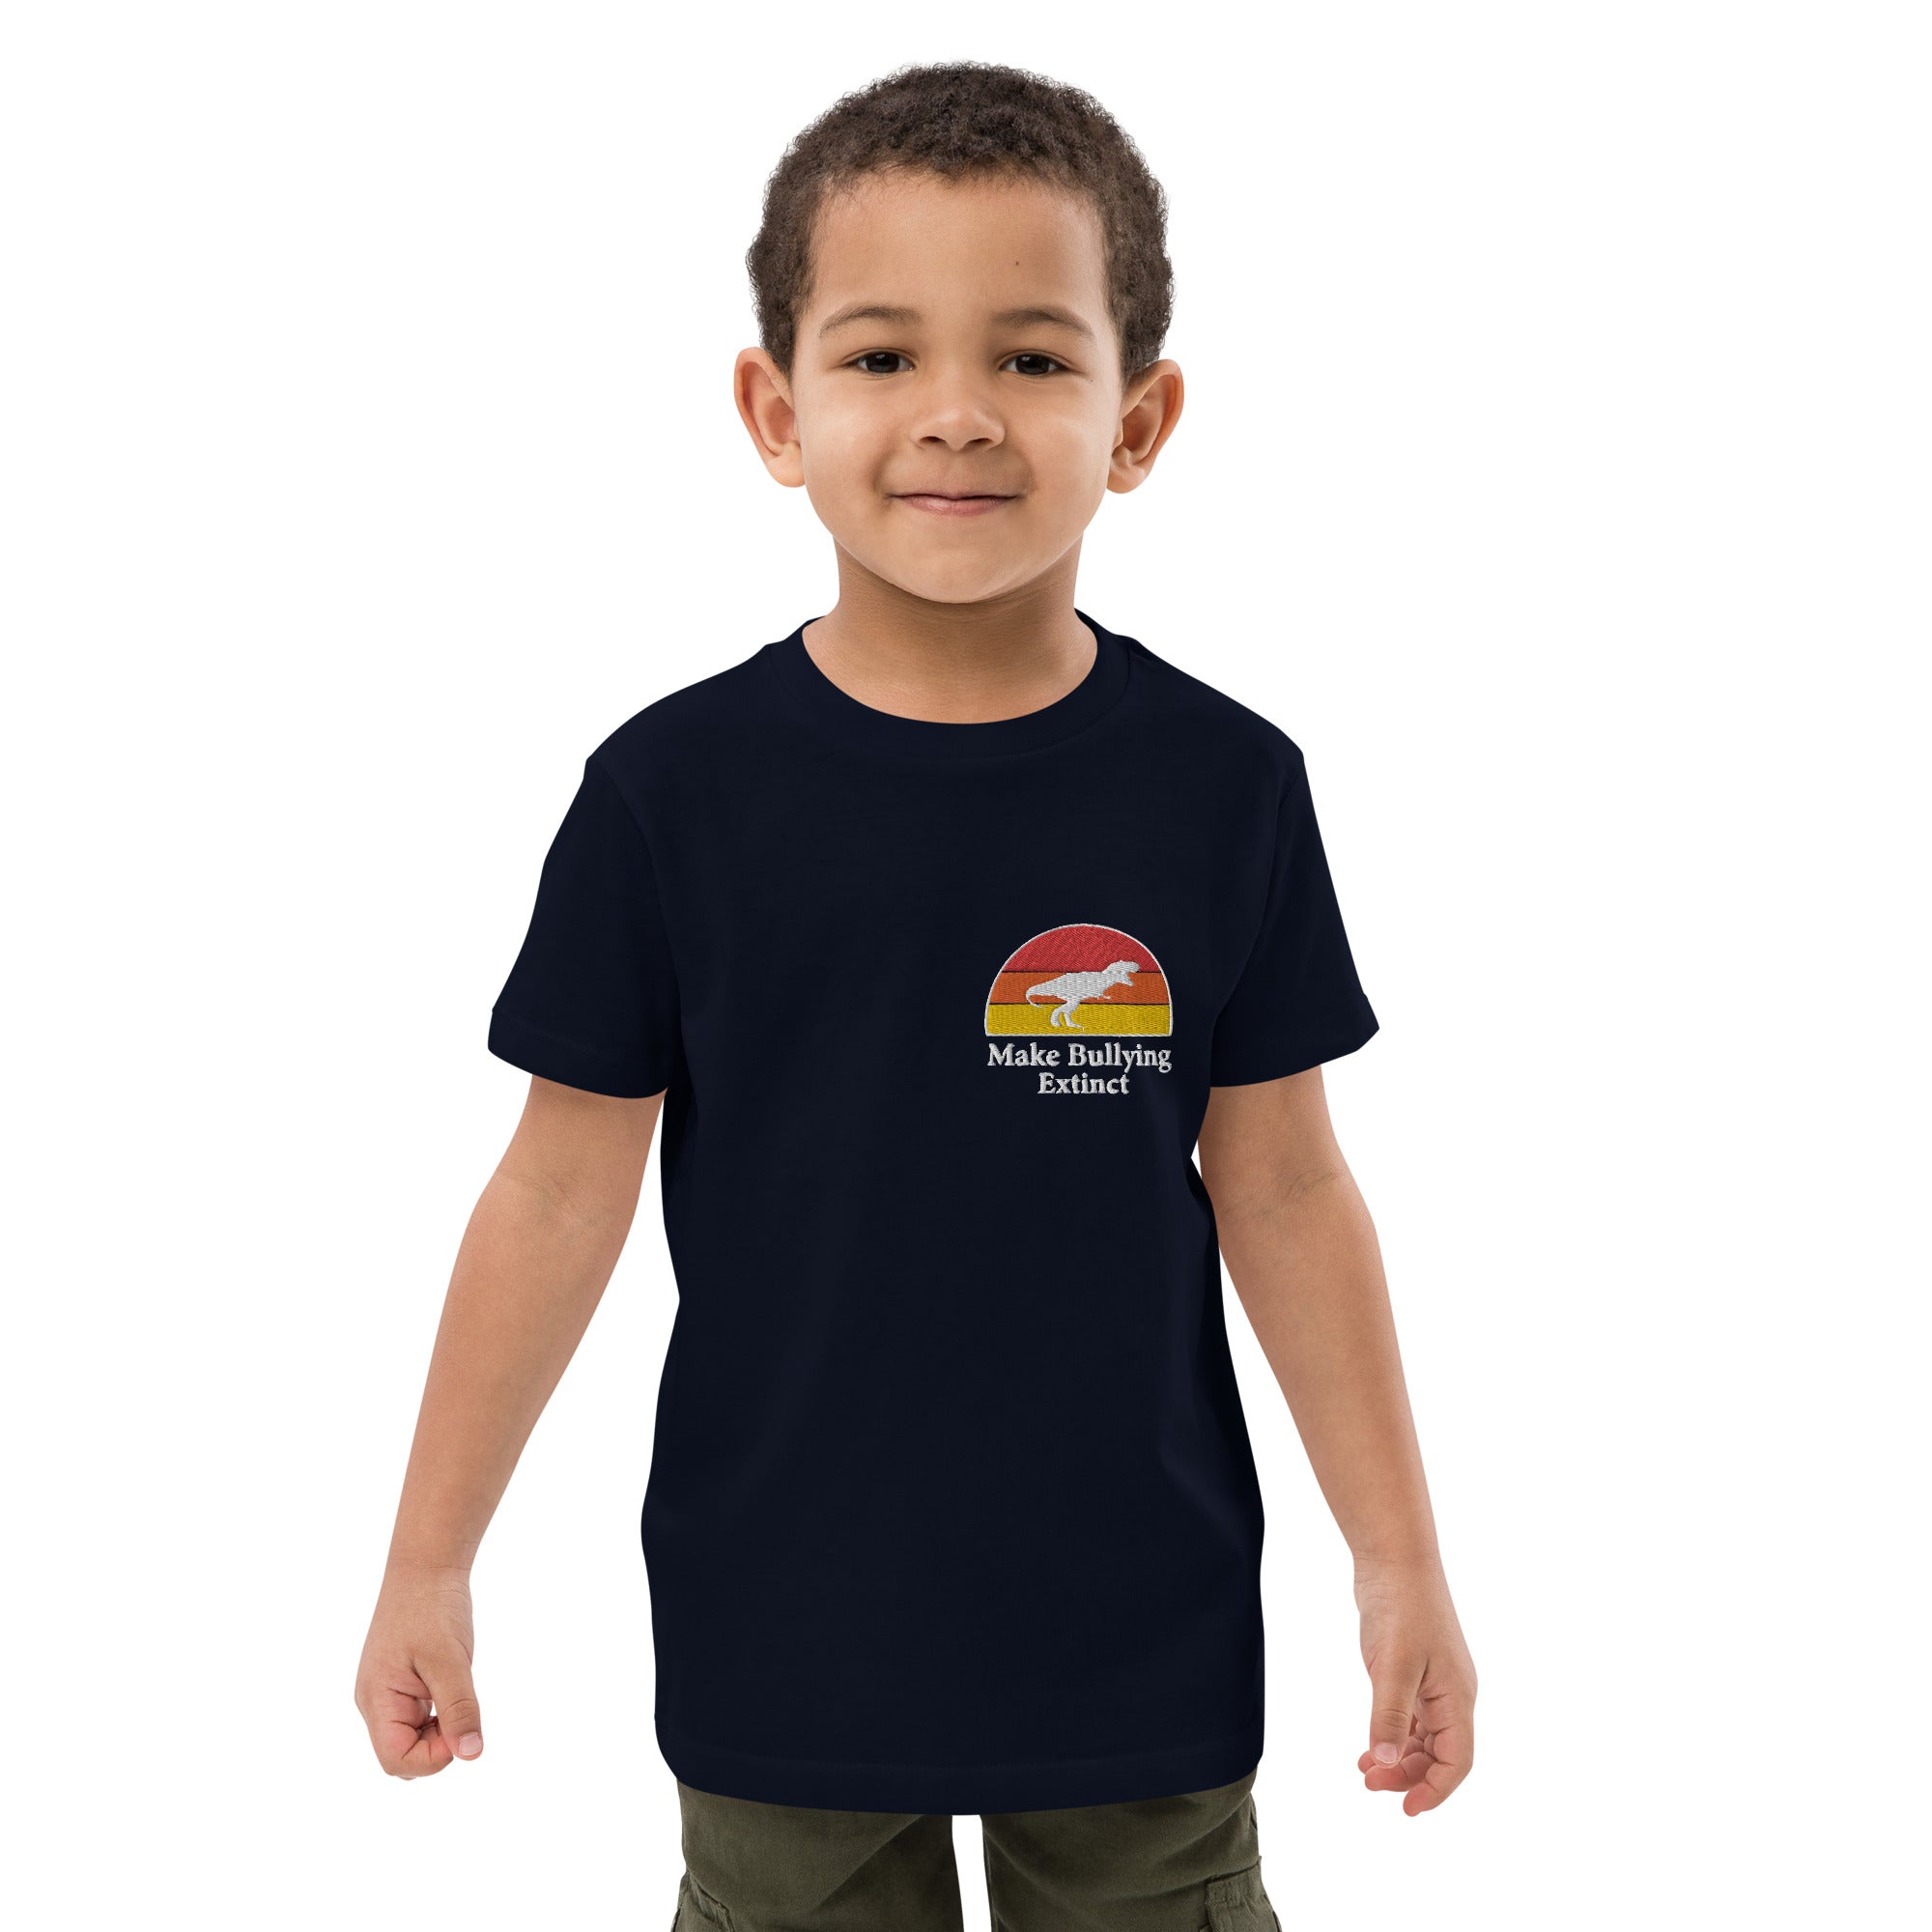 Make Bullying Extinct Organic Cotton Kids T-shirt